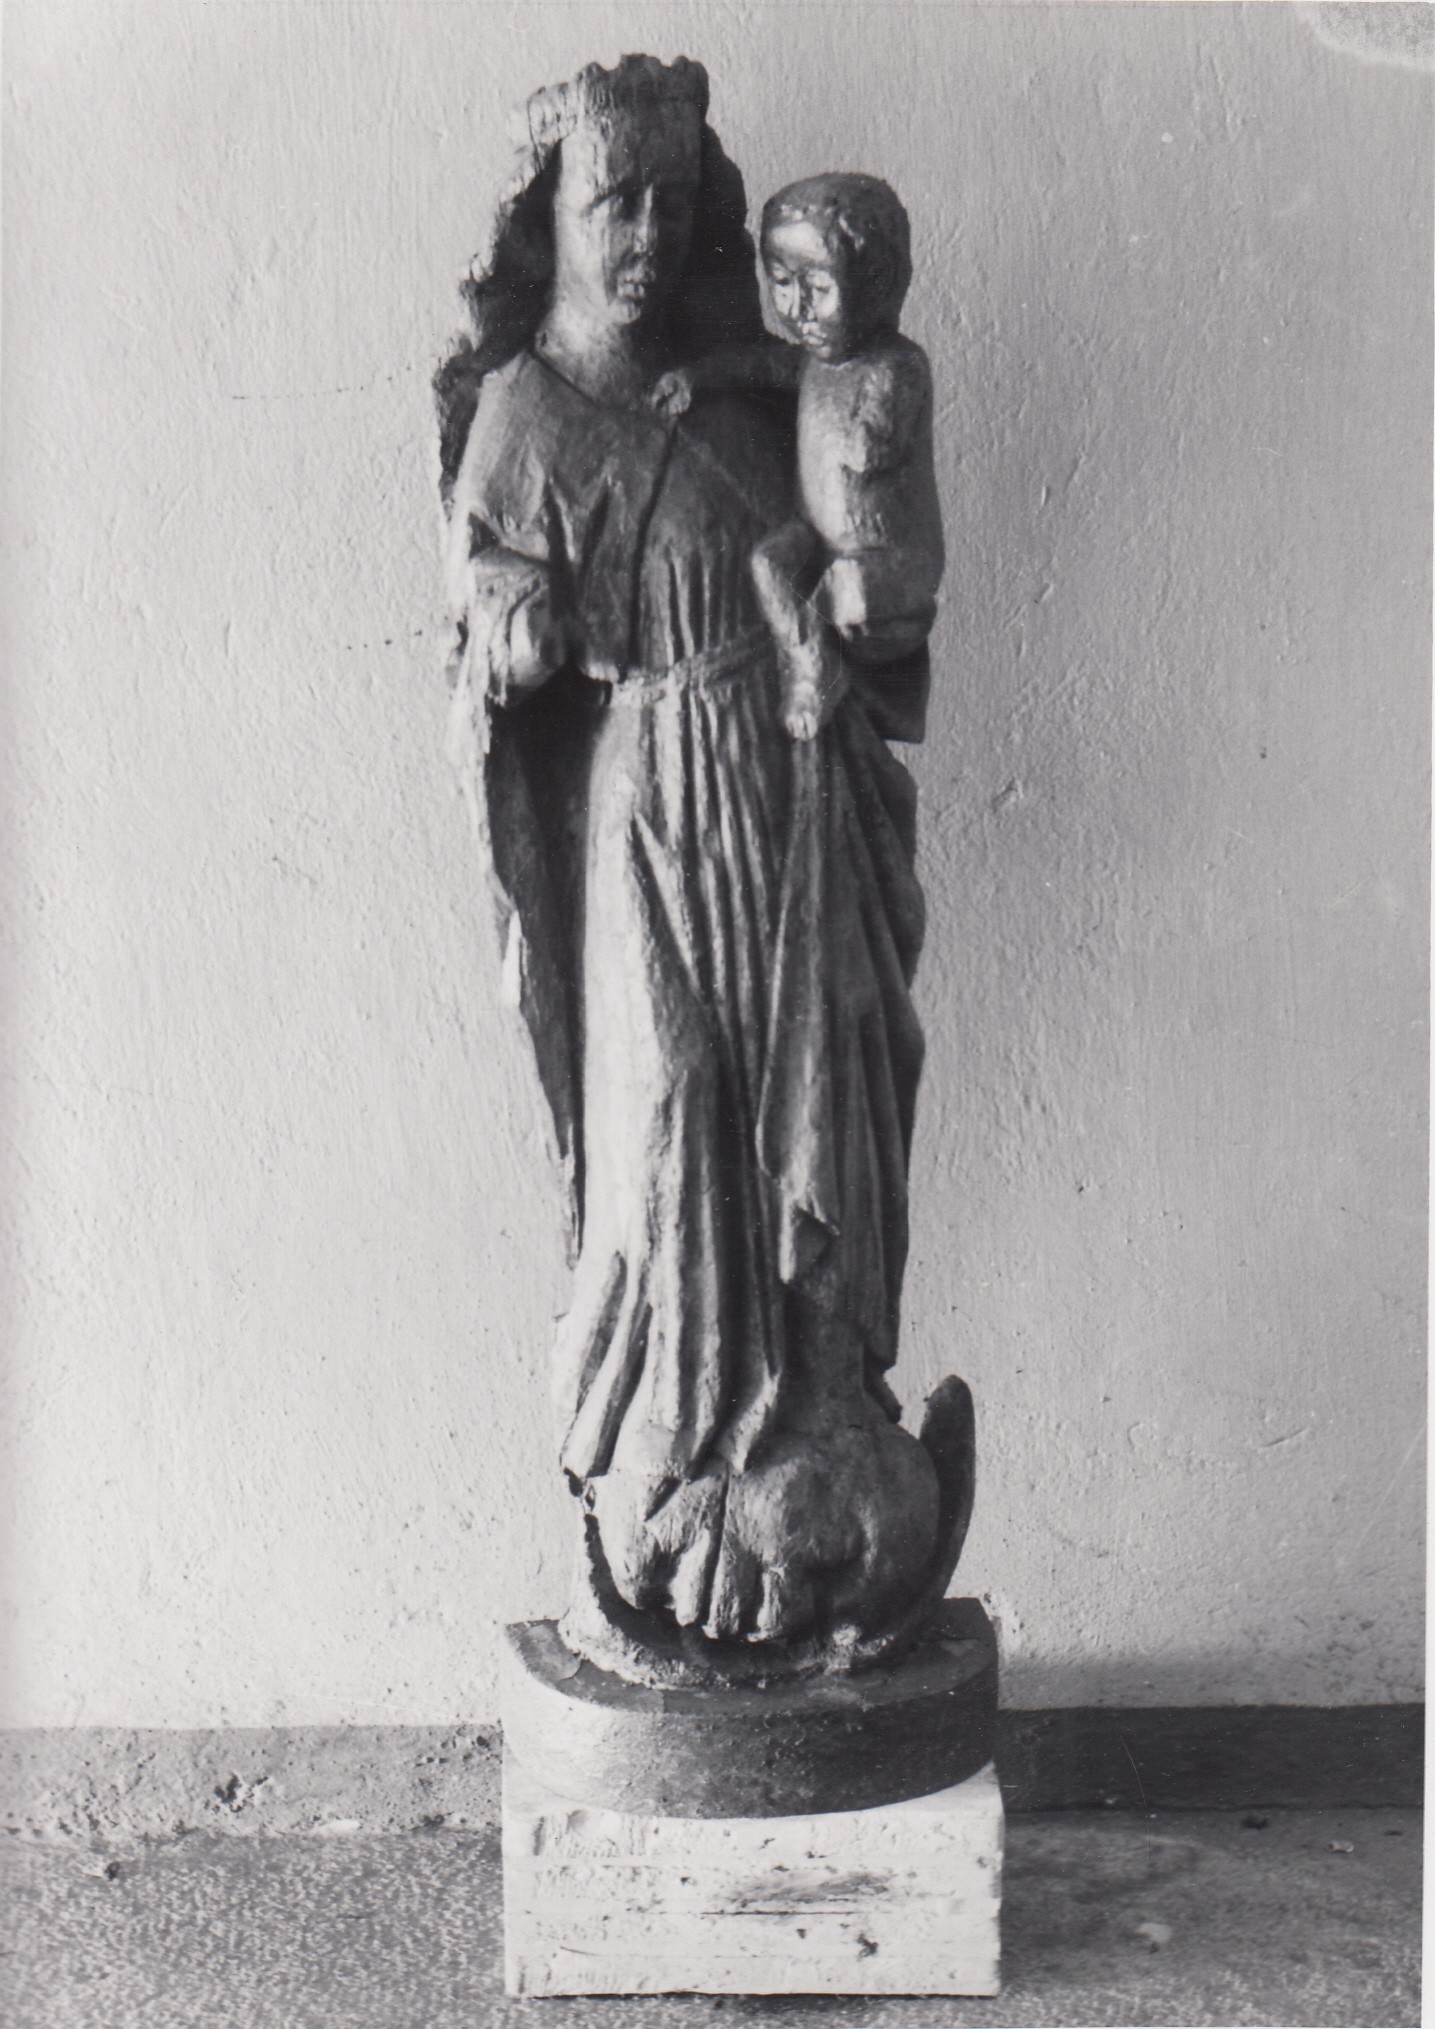 2456: Holzplastik, Madonna auf der Lunula (Museumsverband des Landes Brandenburg e.V. CC BY-NC-SA)